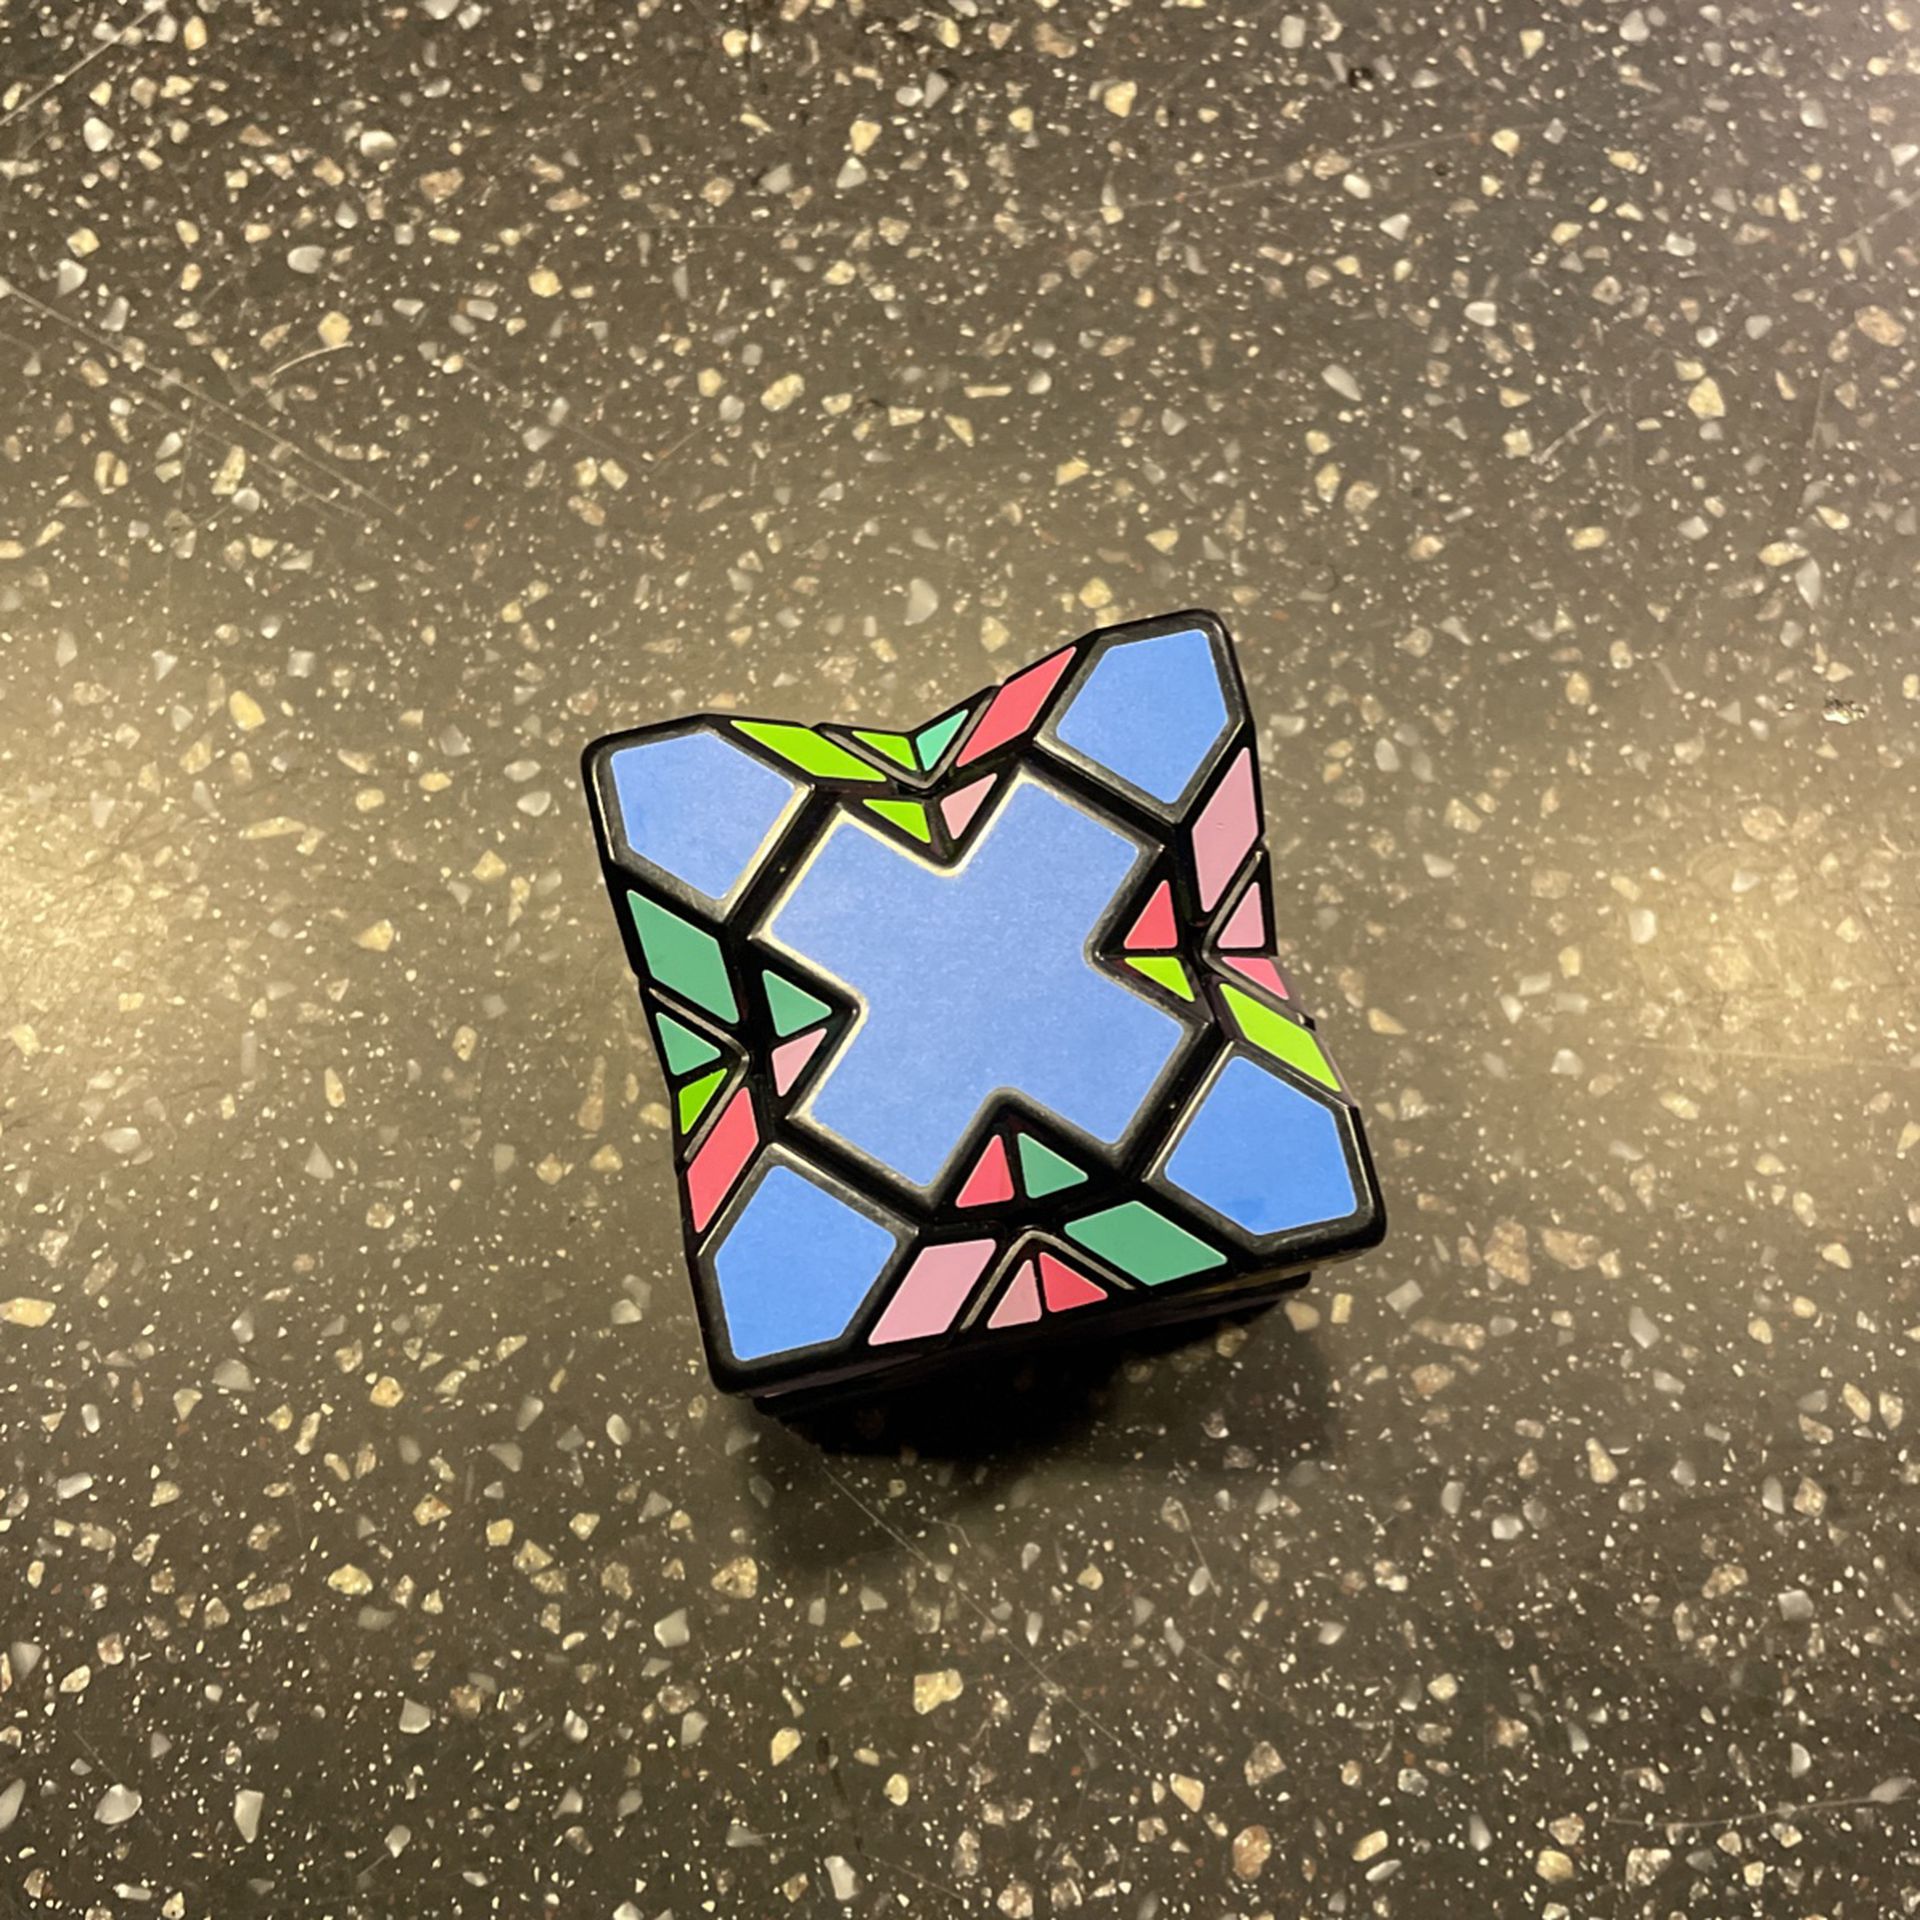 “X” Shaped Rubix Cube